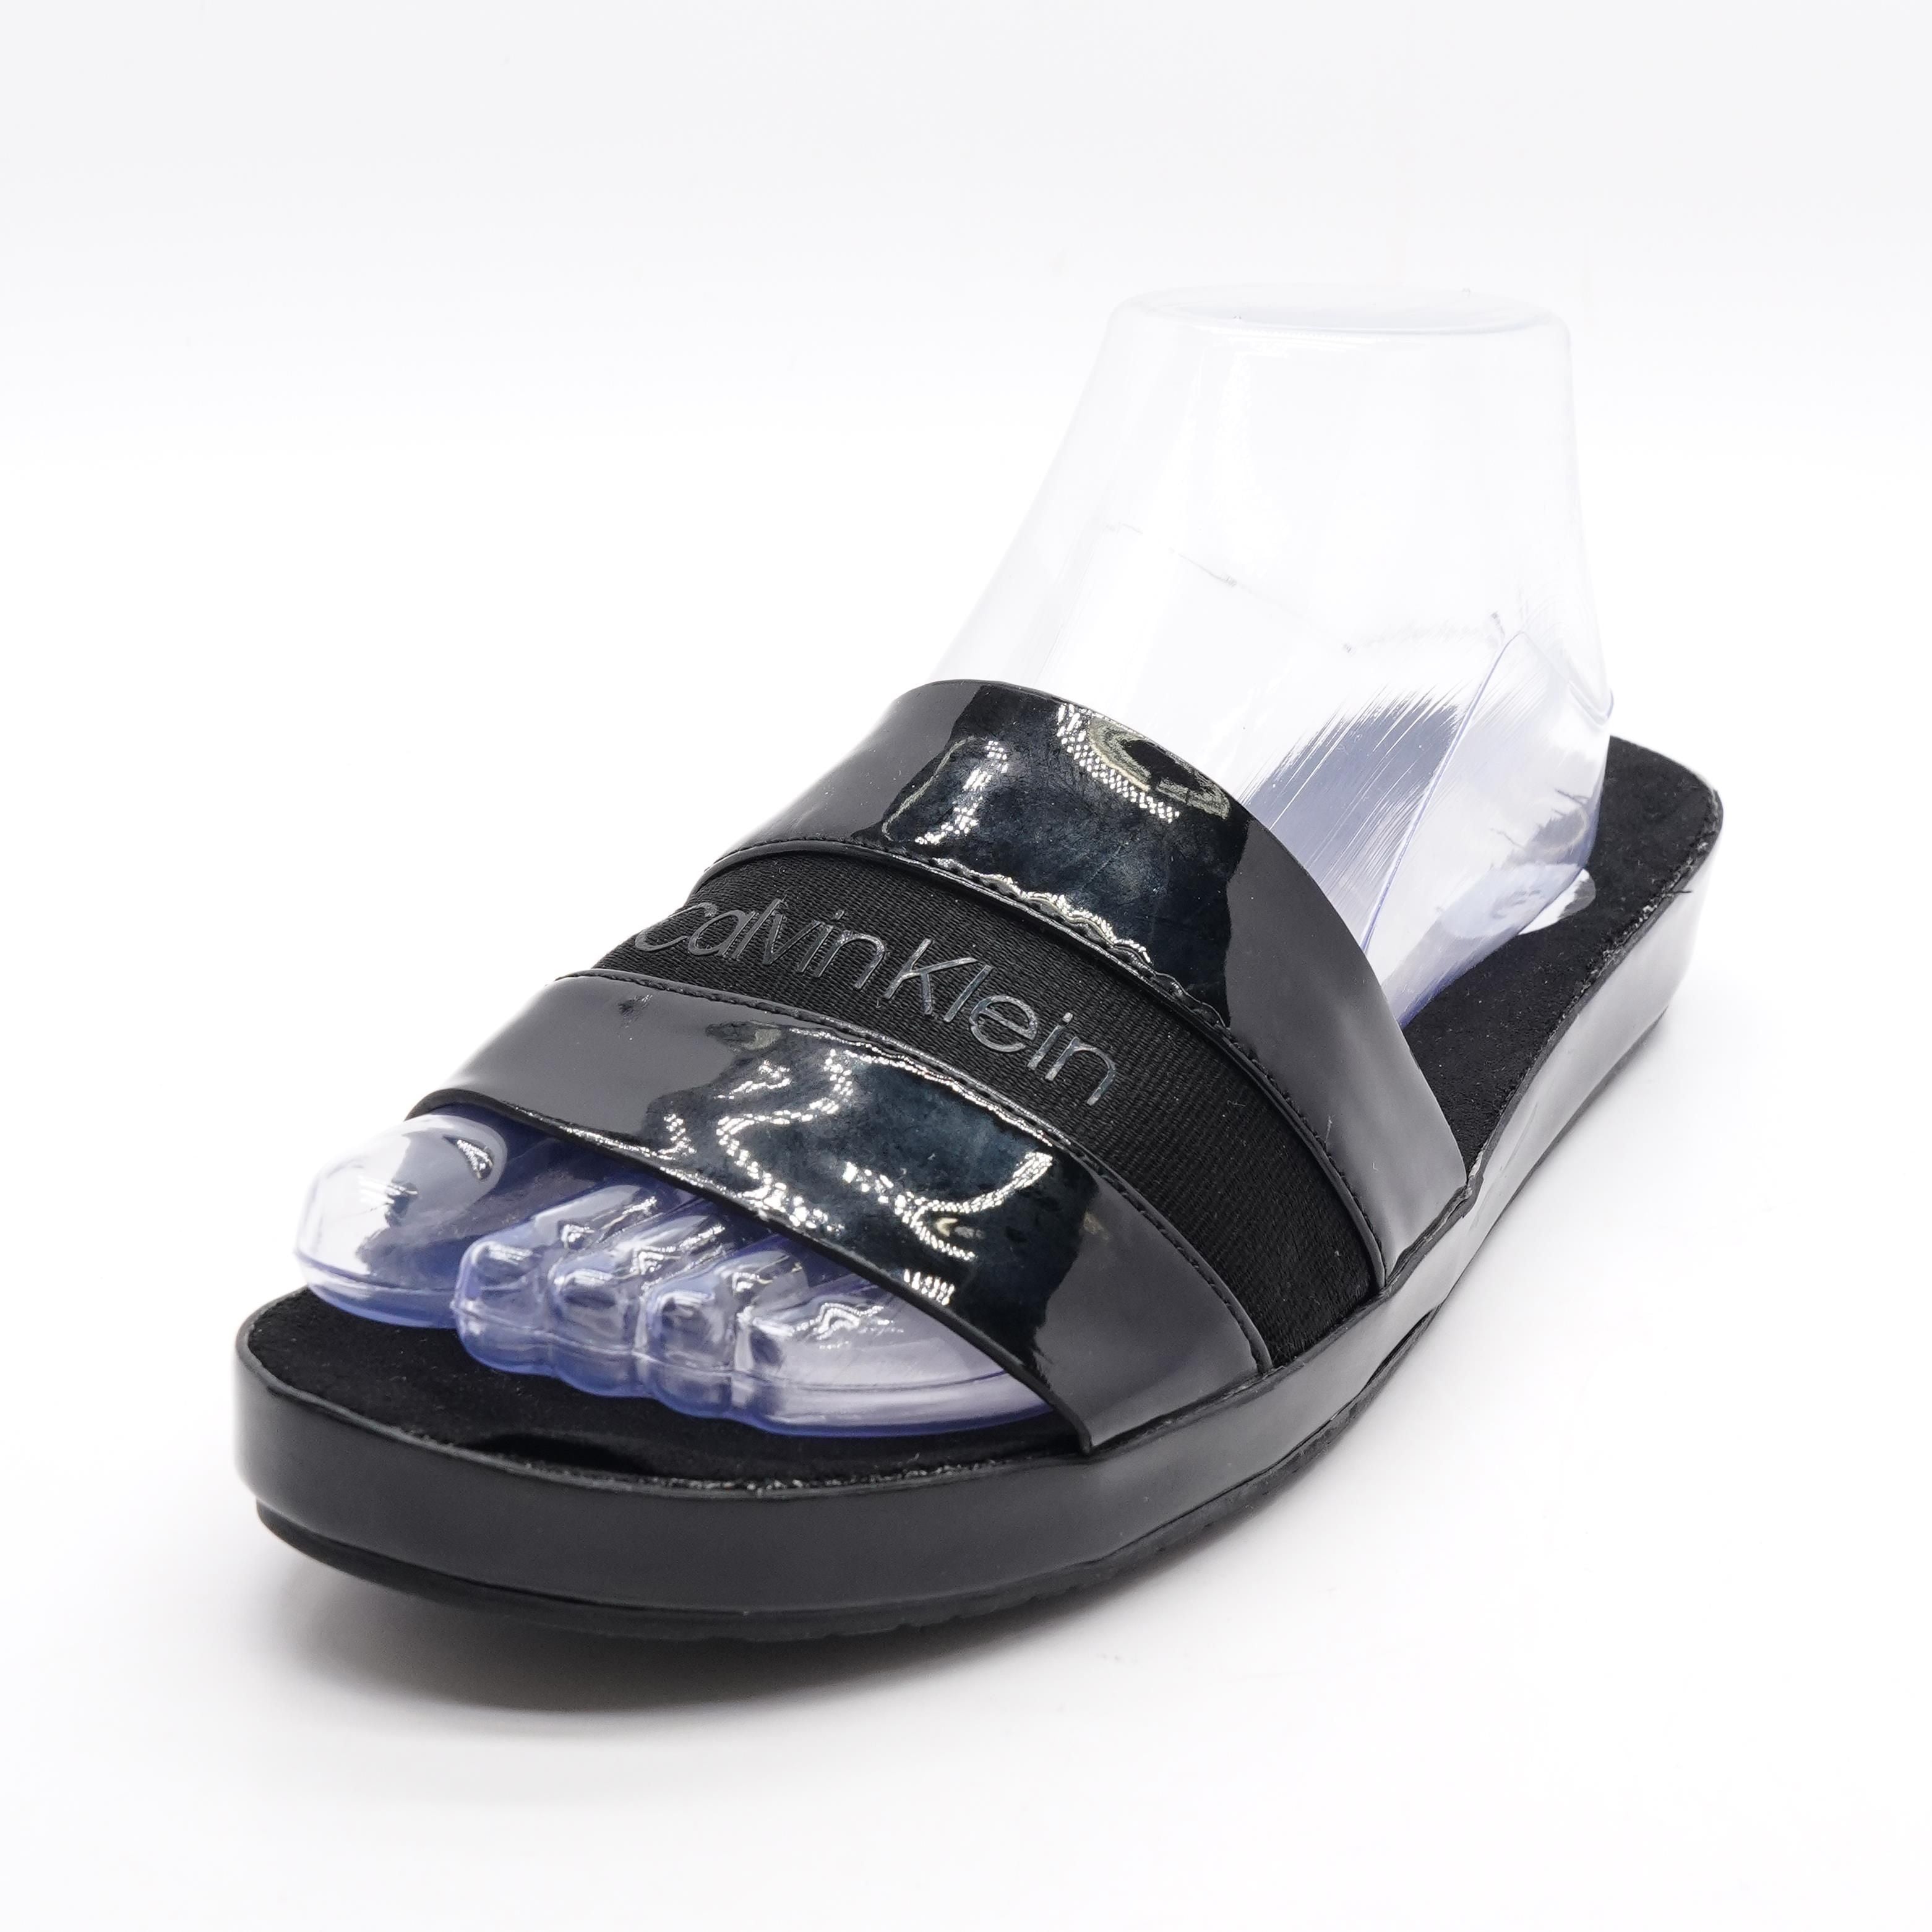 Youth ISlide Black Orlando Magic Personalized Primary Slide Sandals